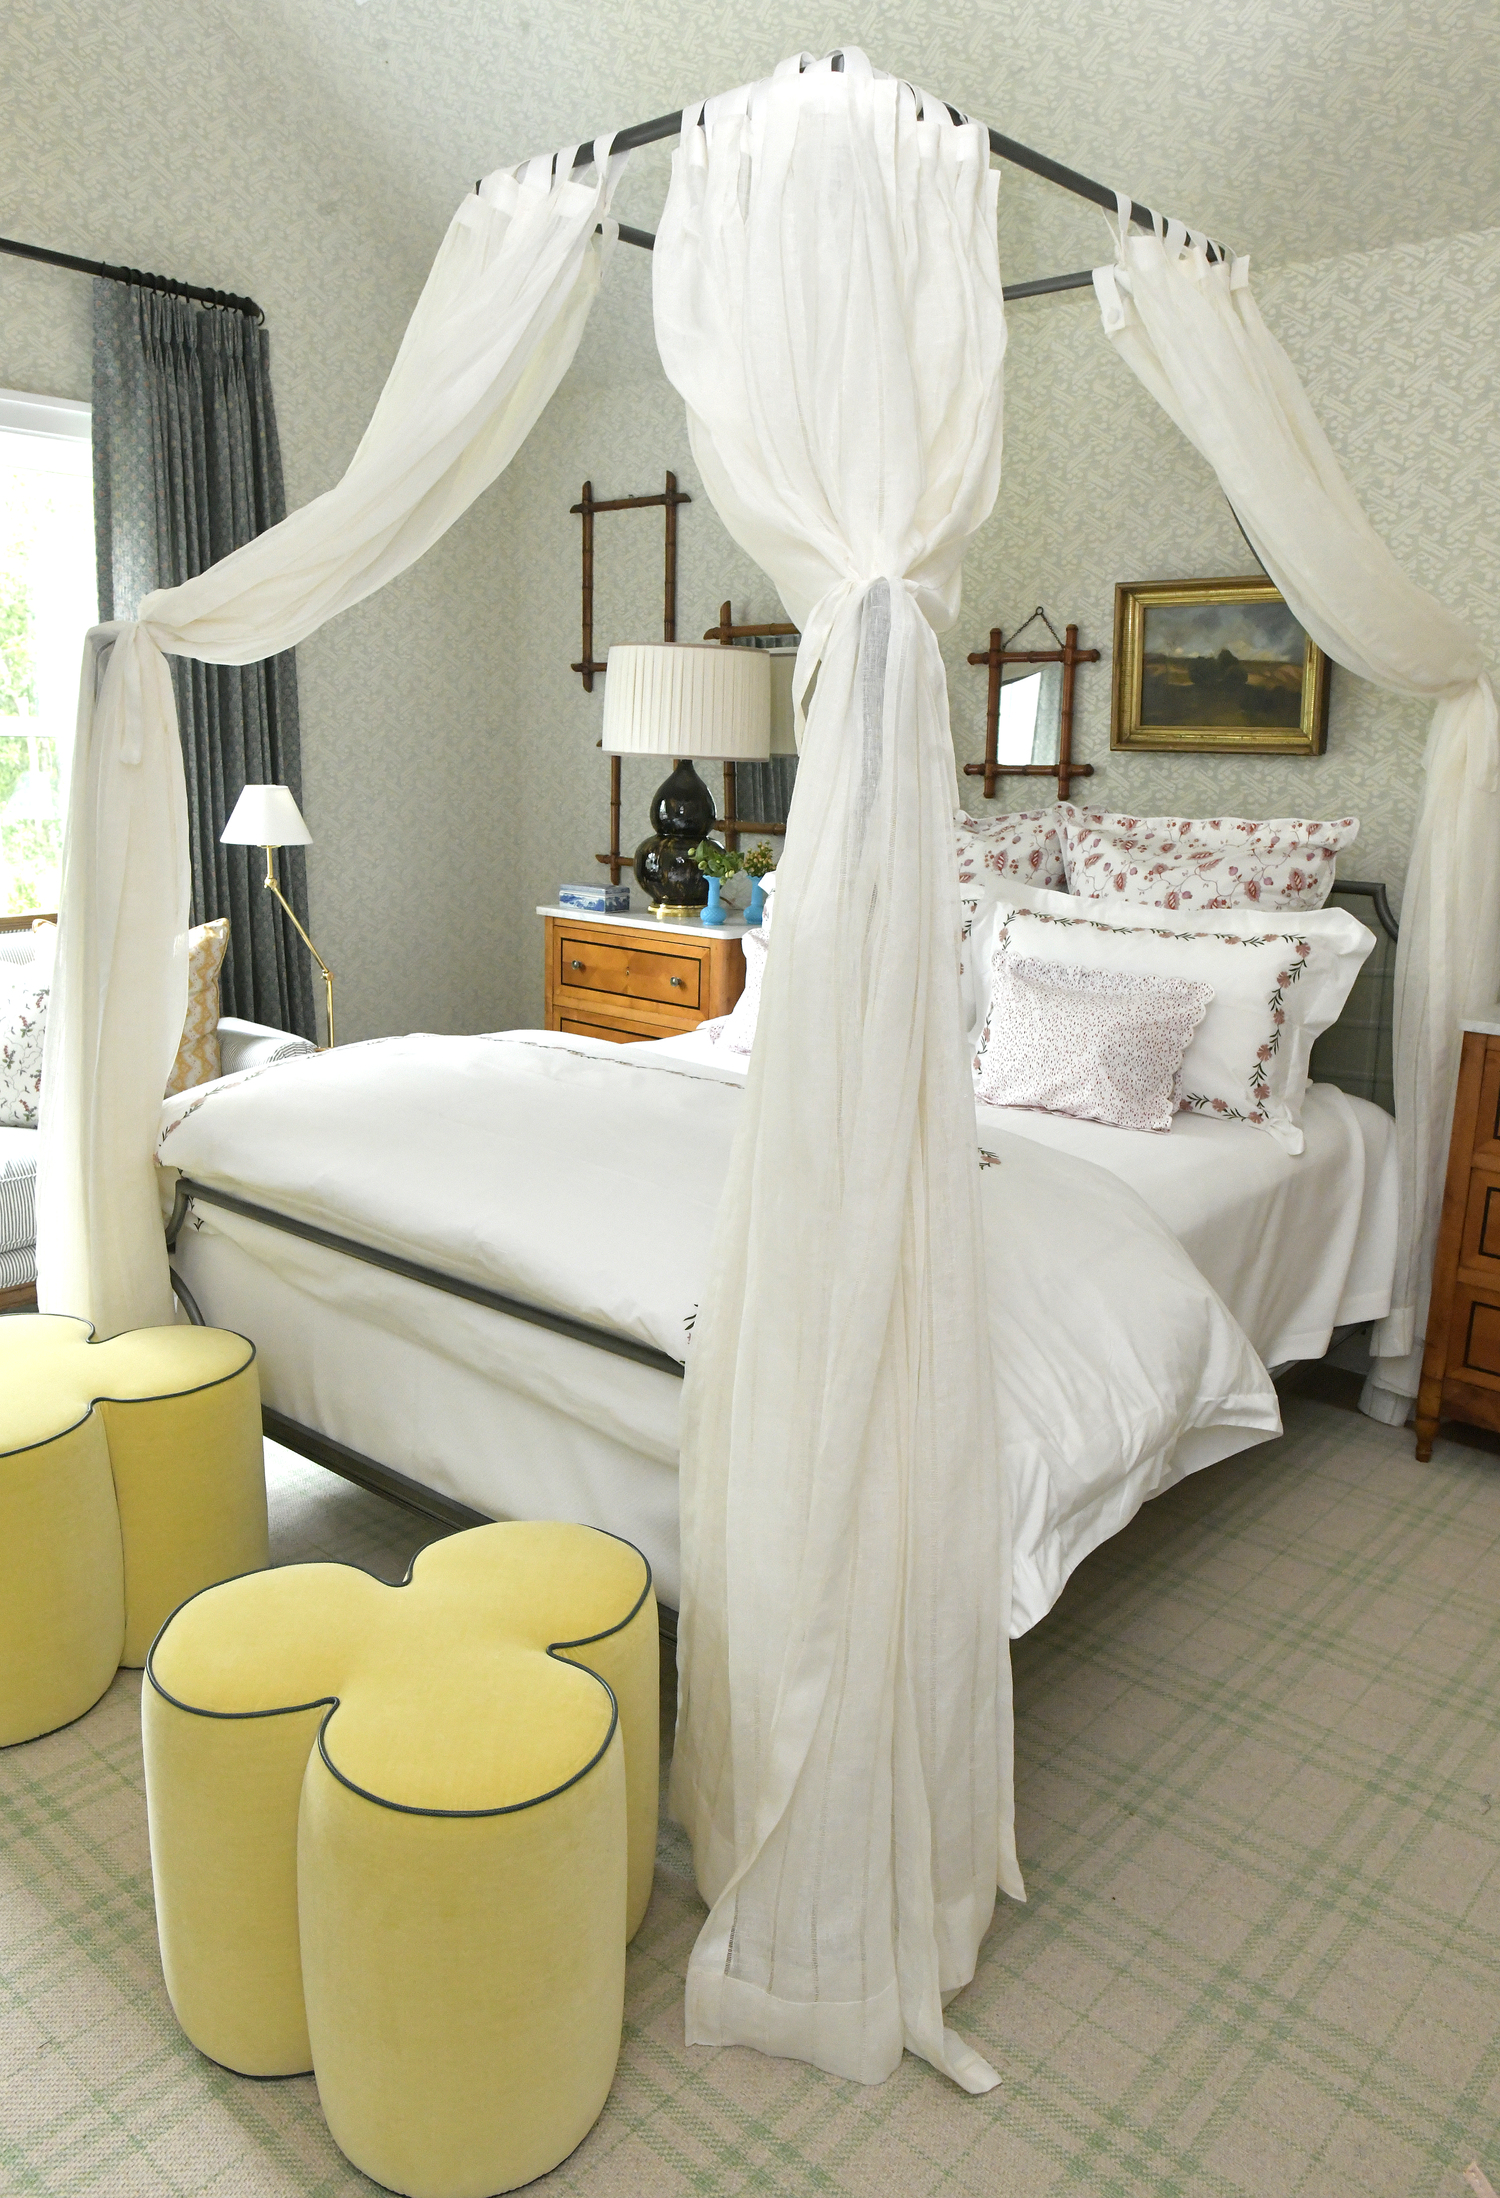 Guest bedroom by Jordan Winston and Tate Casper of Oxford Design Studio.  DANA SHAW